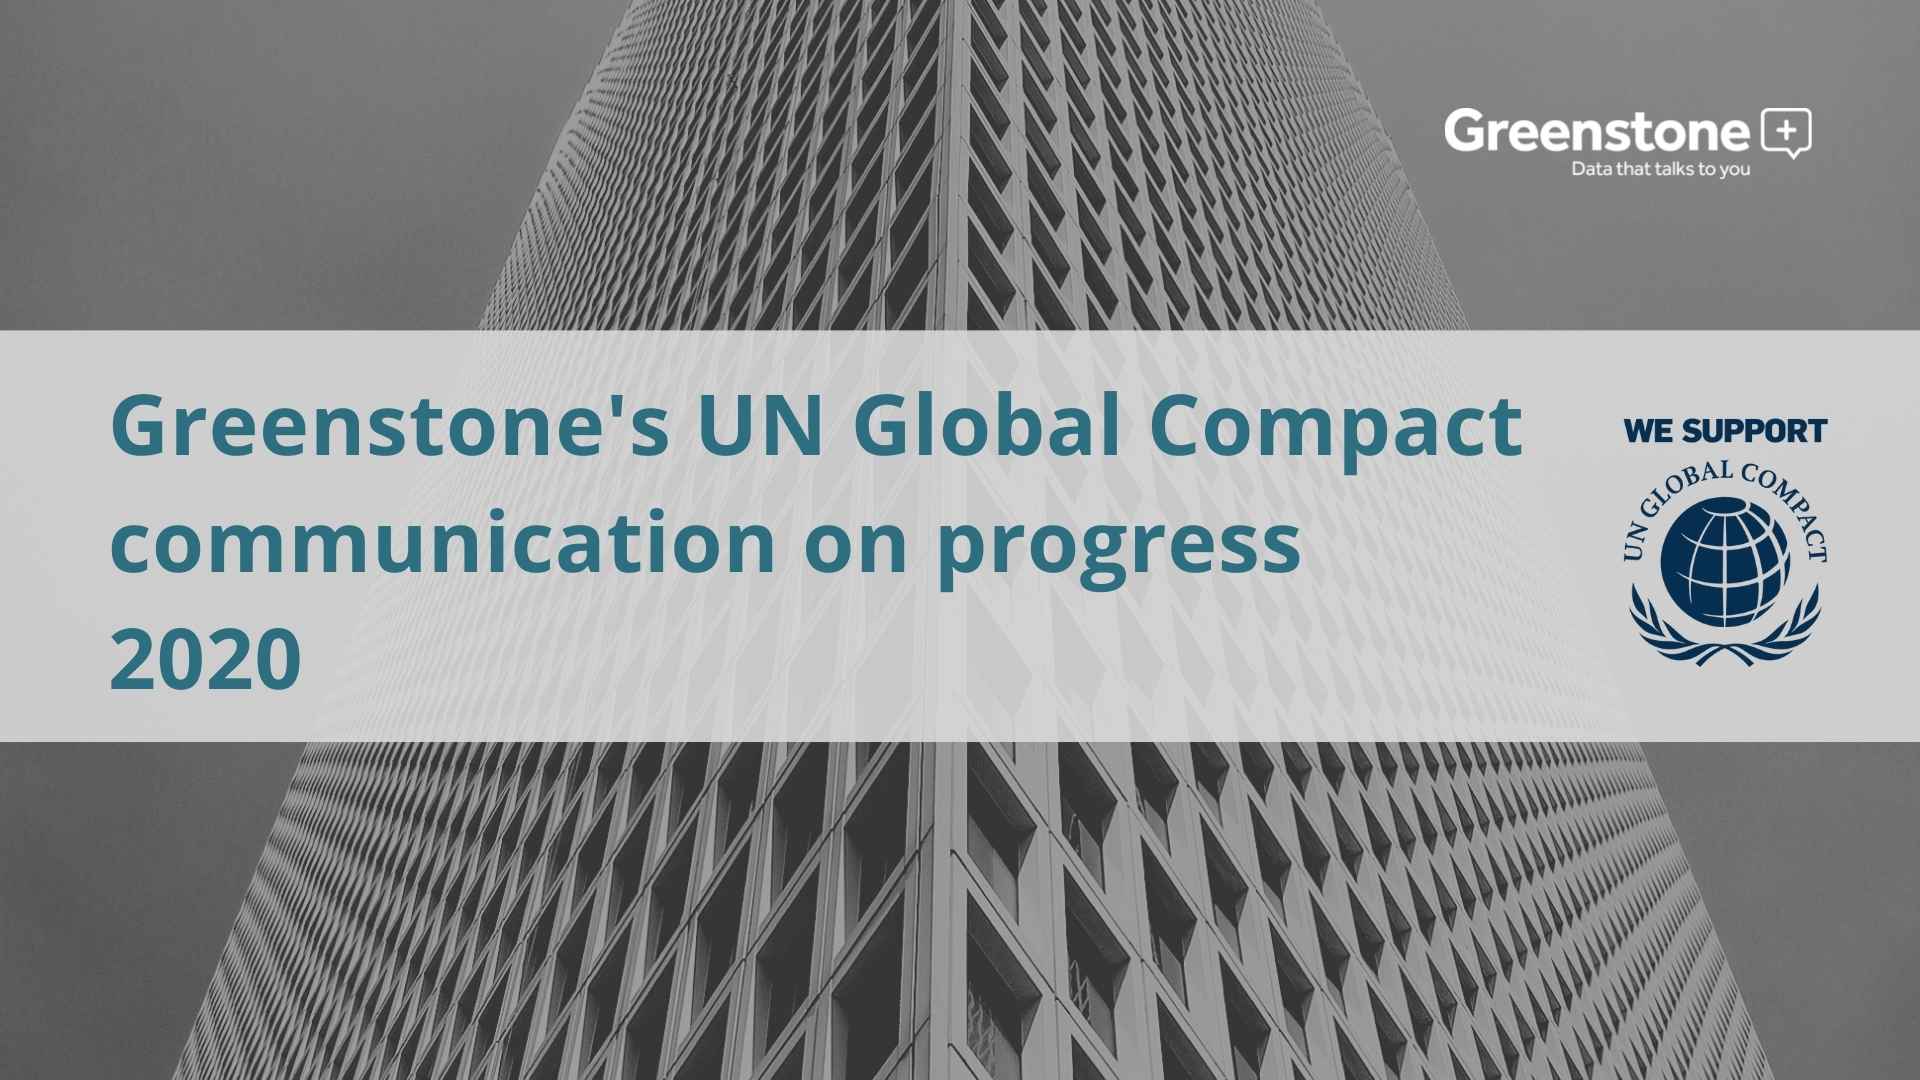 Greenstone's UN Global Compact communication on progress 2020